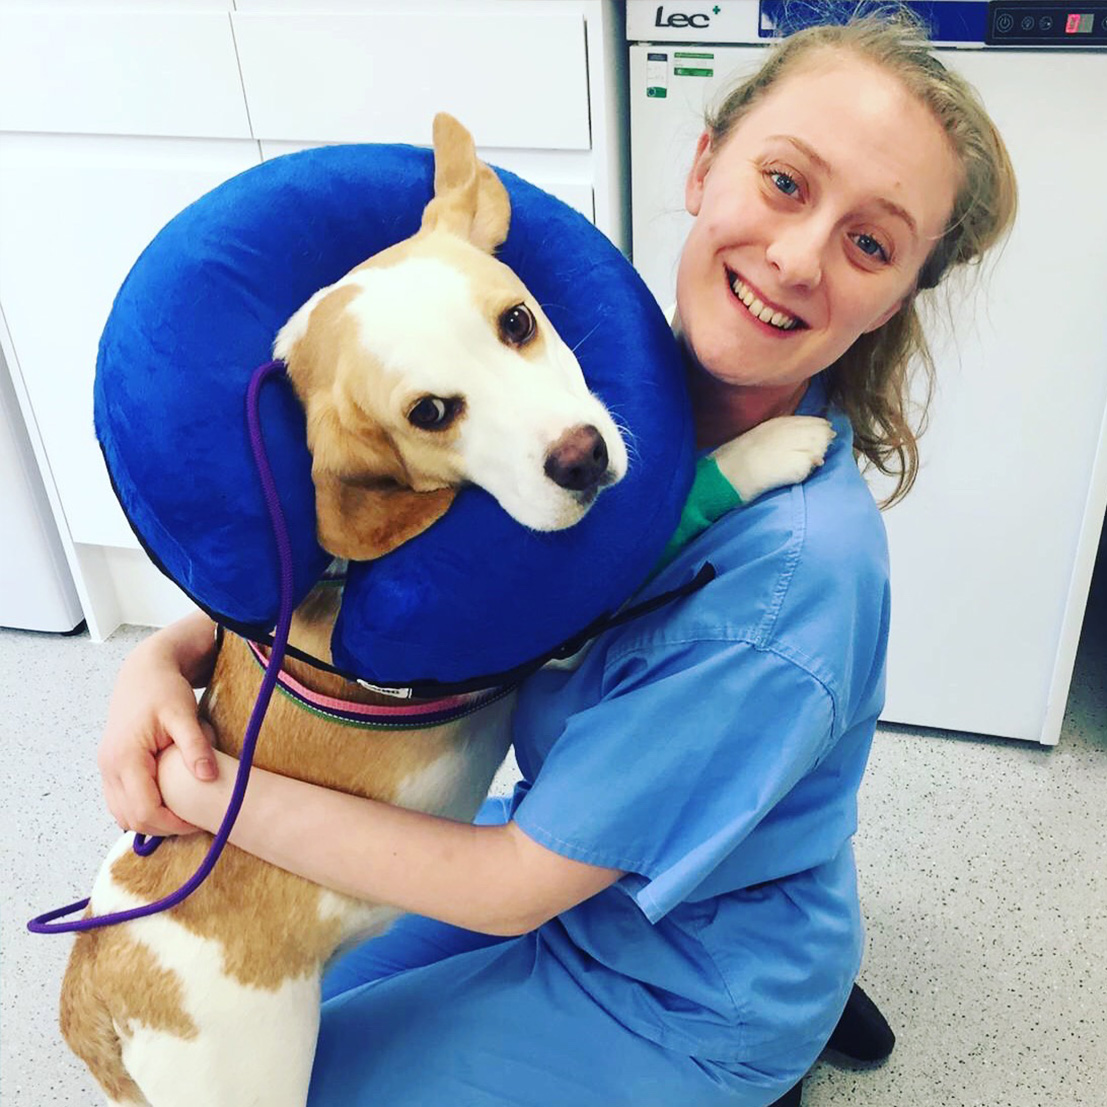 Nurse with dog